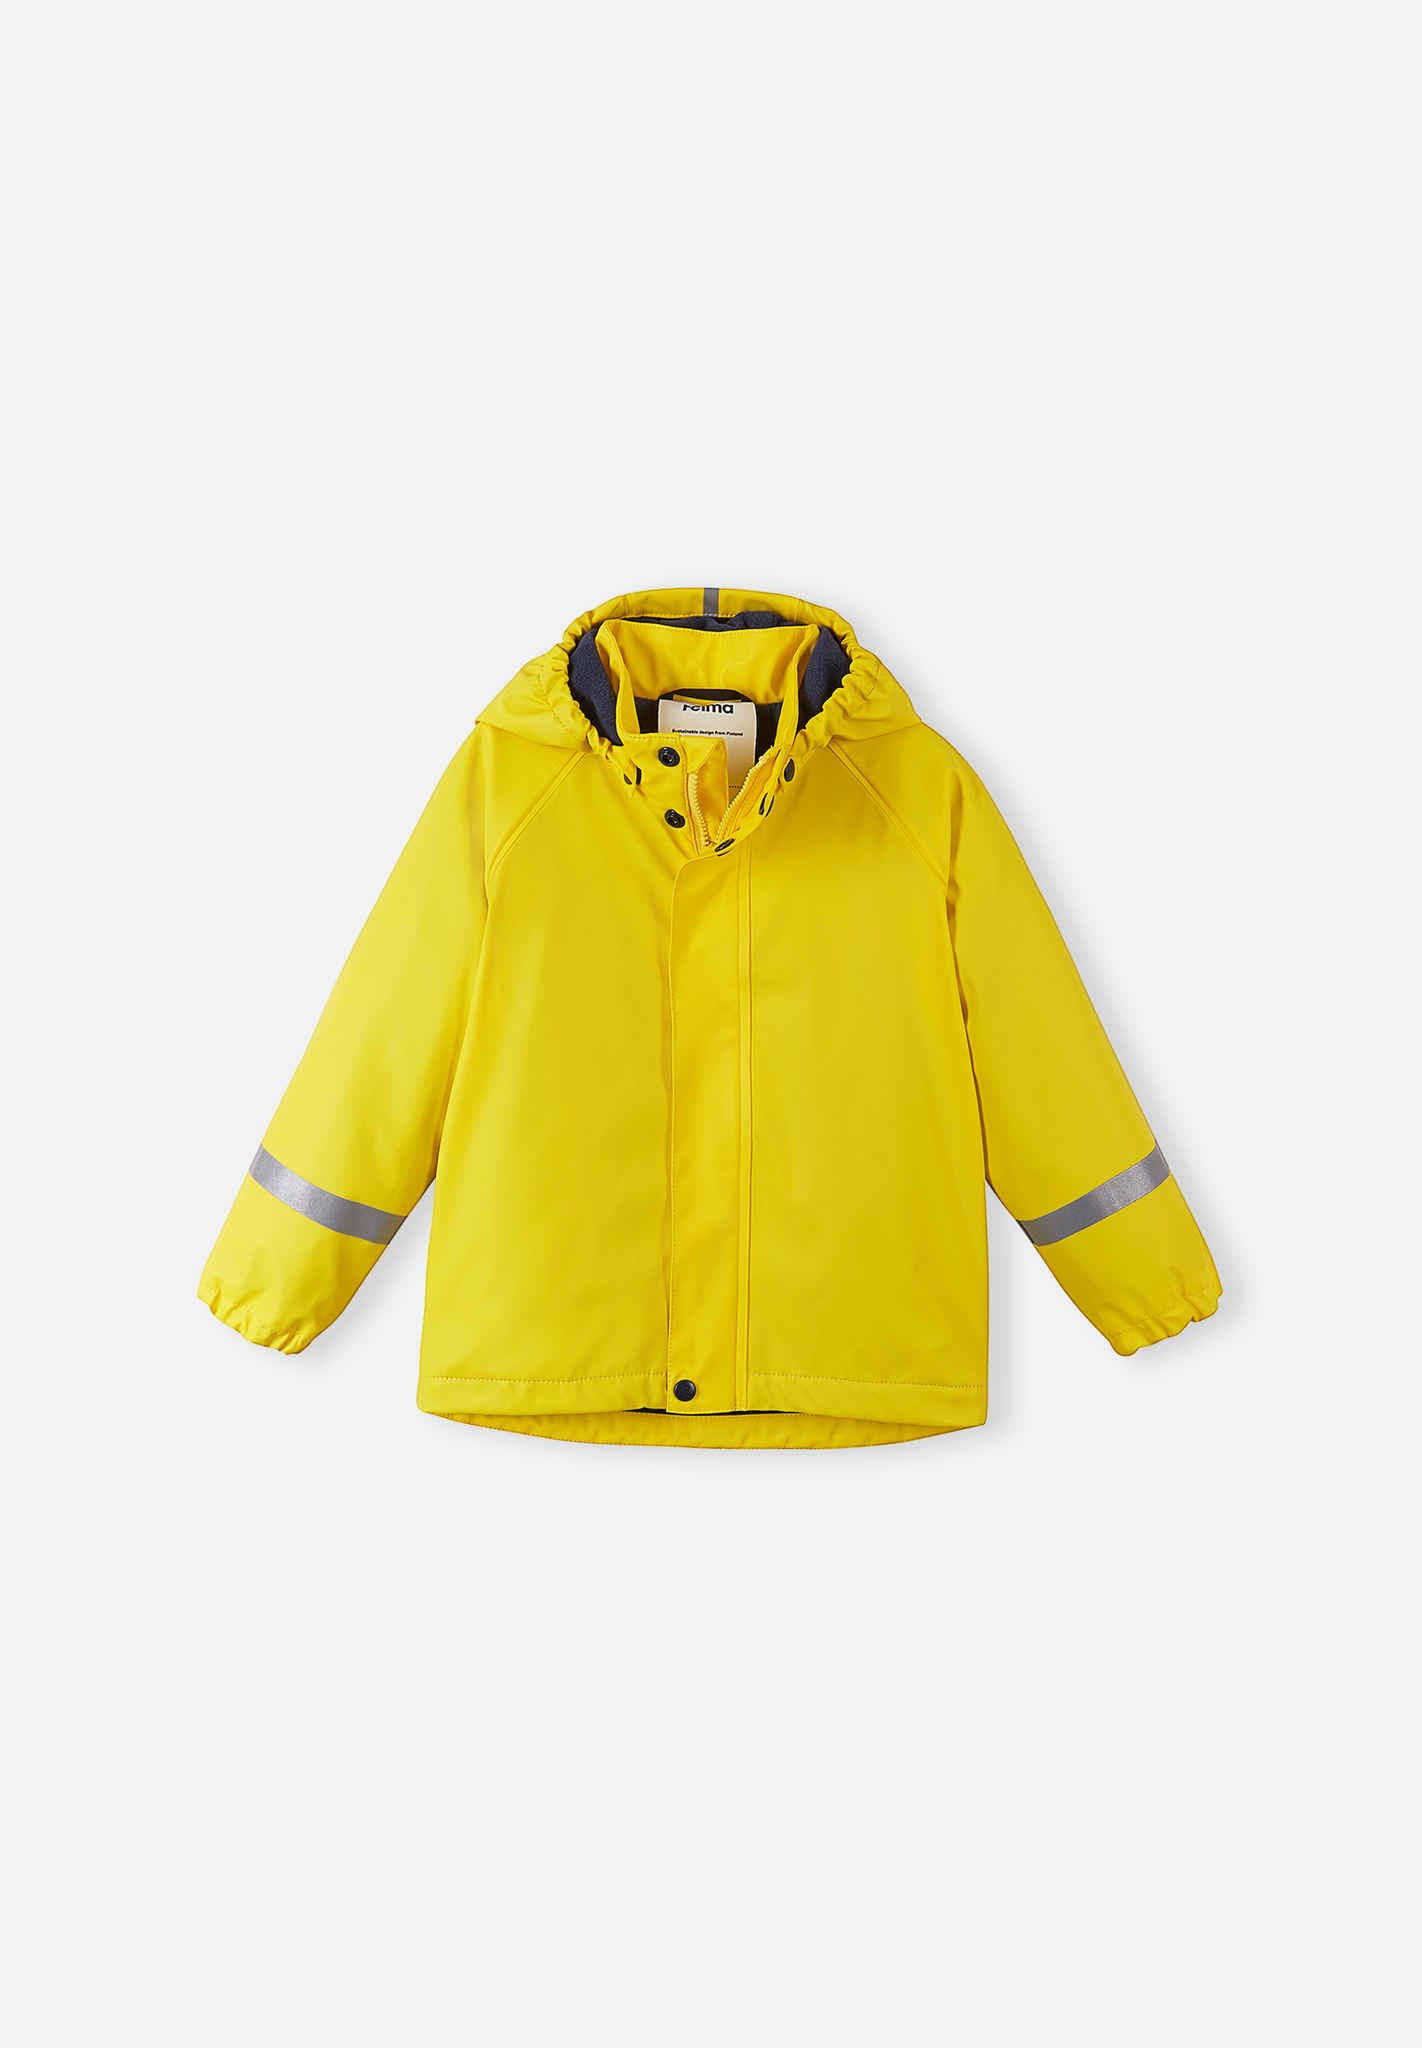 Reima Yellow Joki Rain Set - Clothing Sets - 116 cm - Yellow